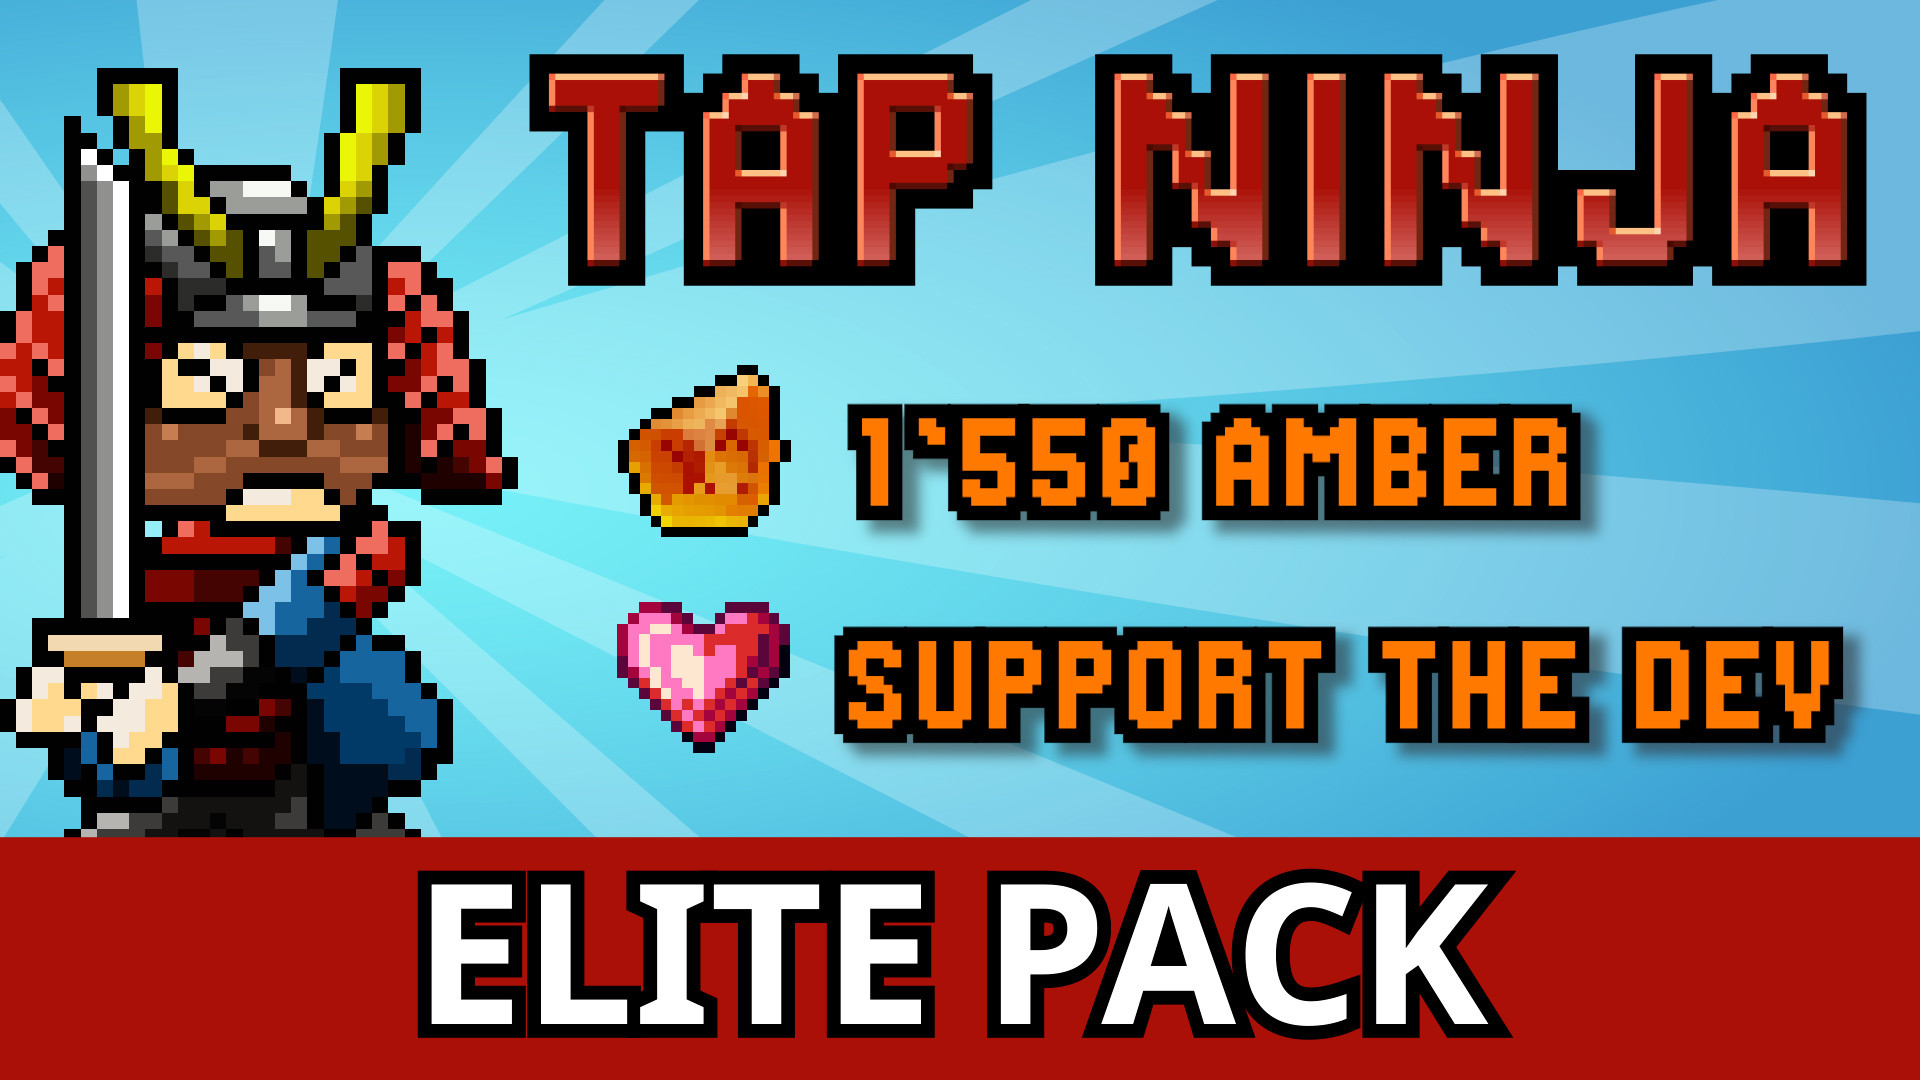 Tap Ninja - Idle Game na App Store